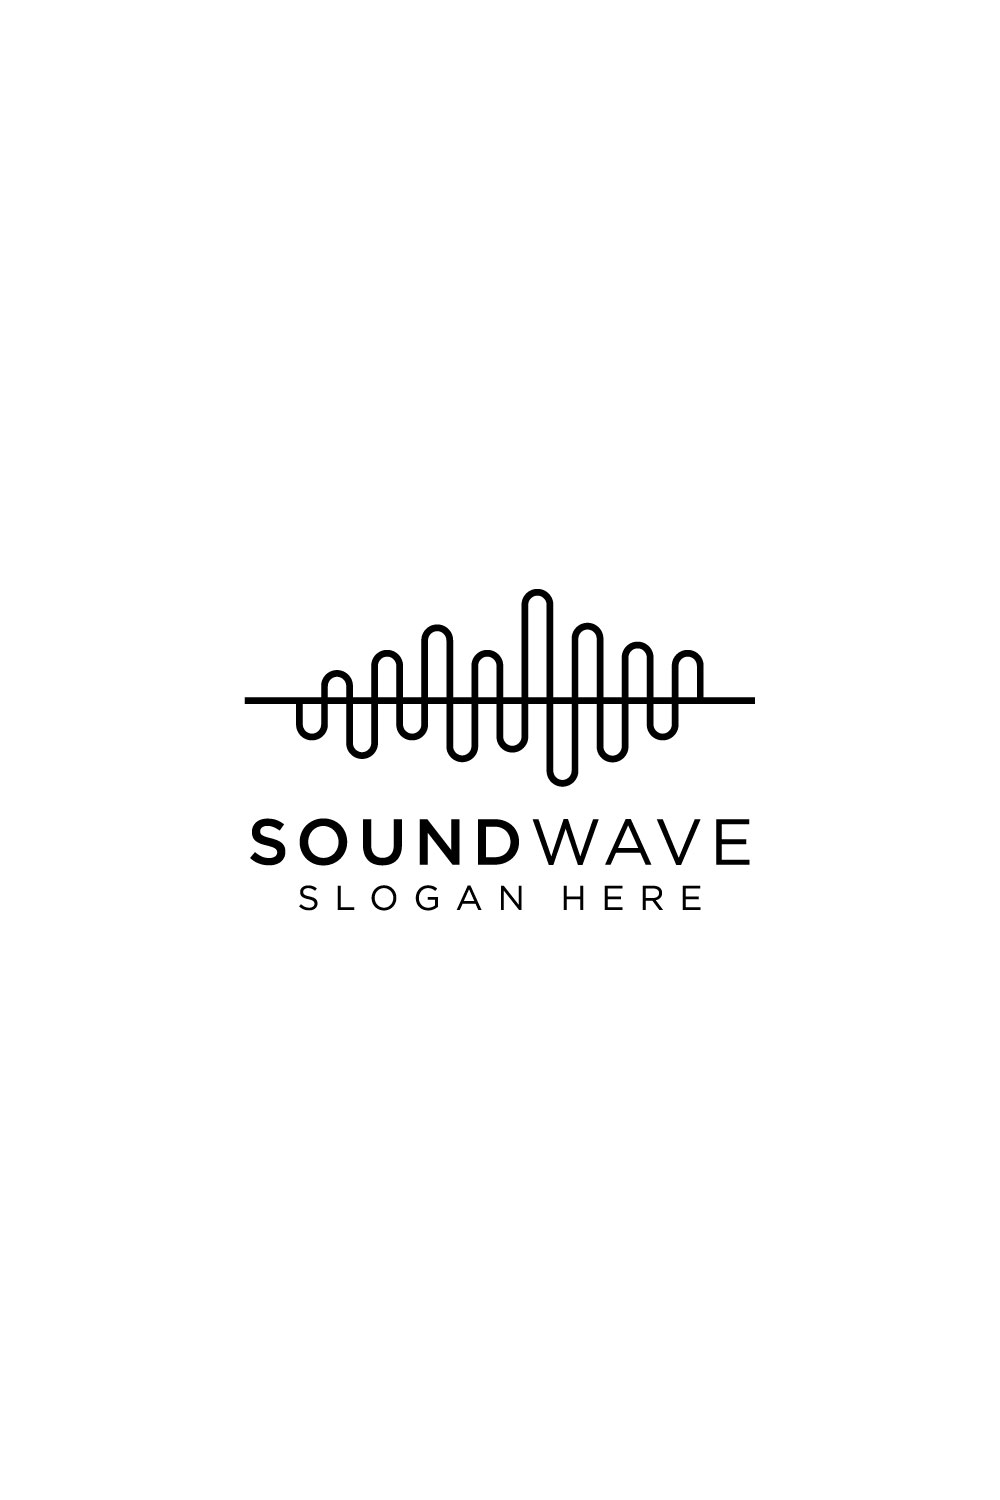 sound wave logo design vector pinterest preview image.